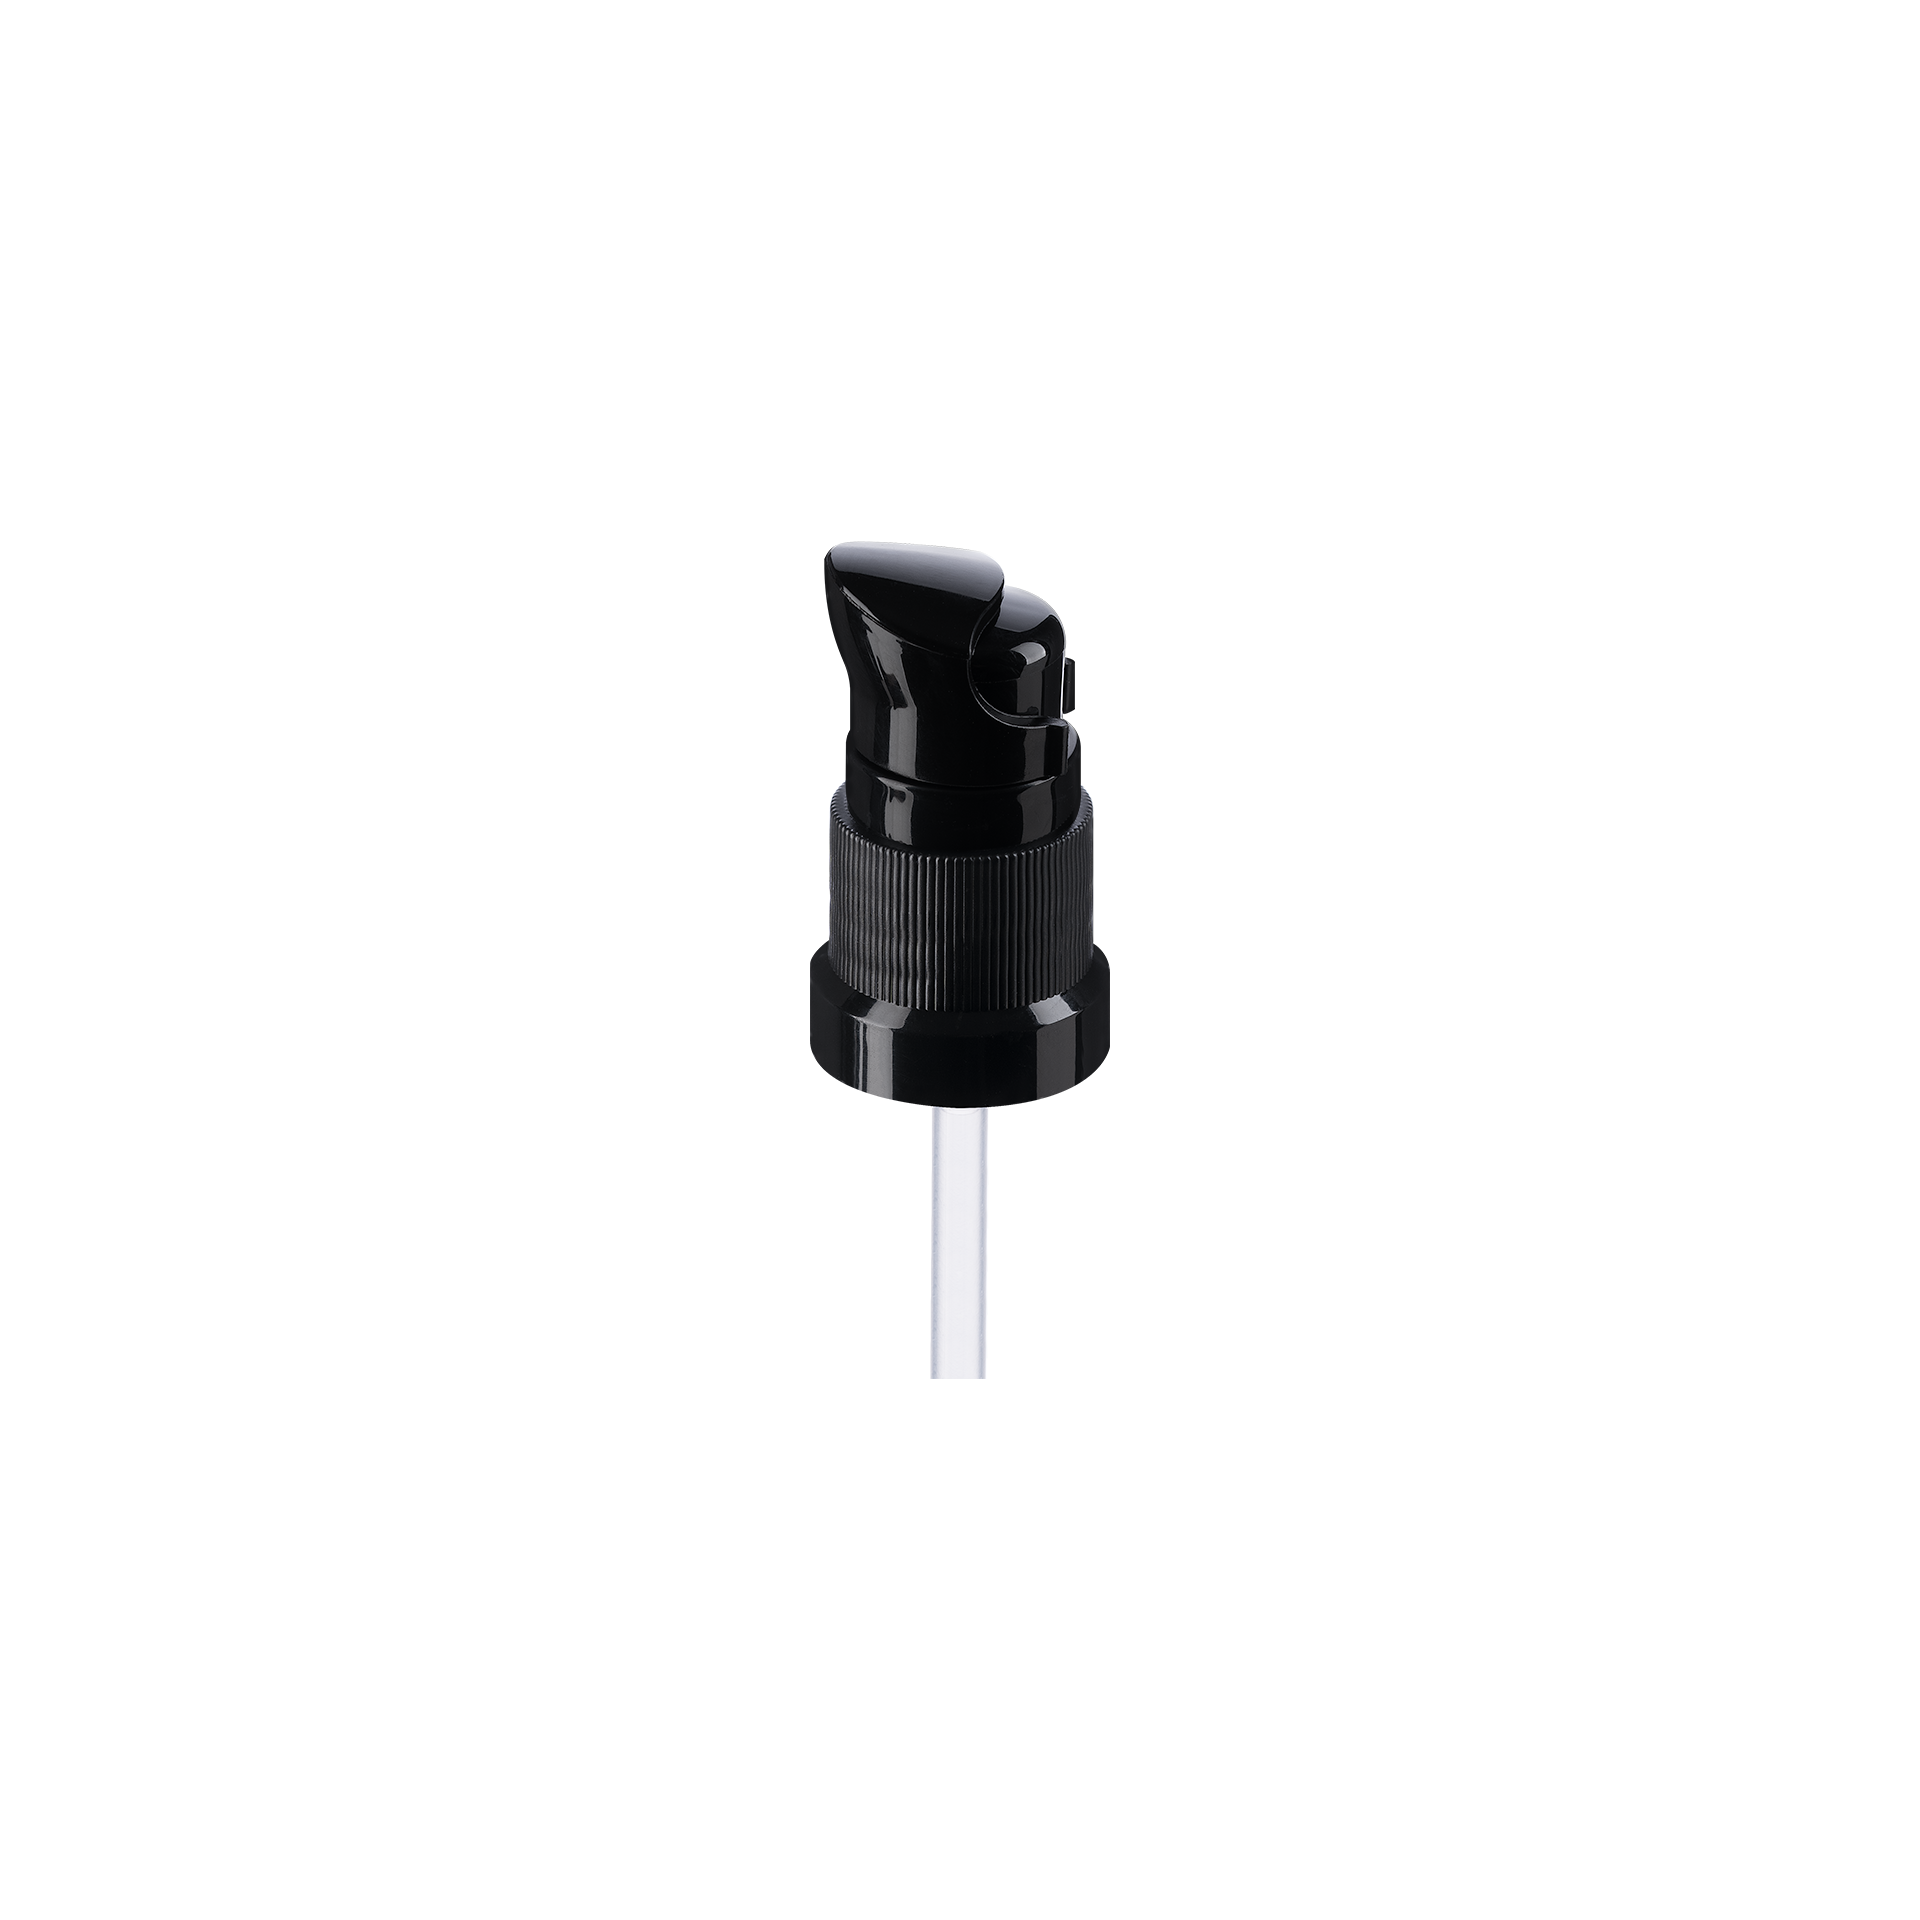 Lotion pump Metropolitan DIN18, PP, black, dose 0.15ml, black security clip (Ginger 5)